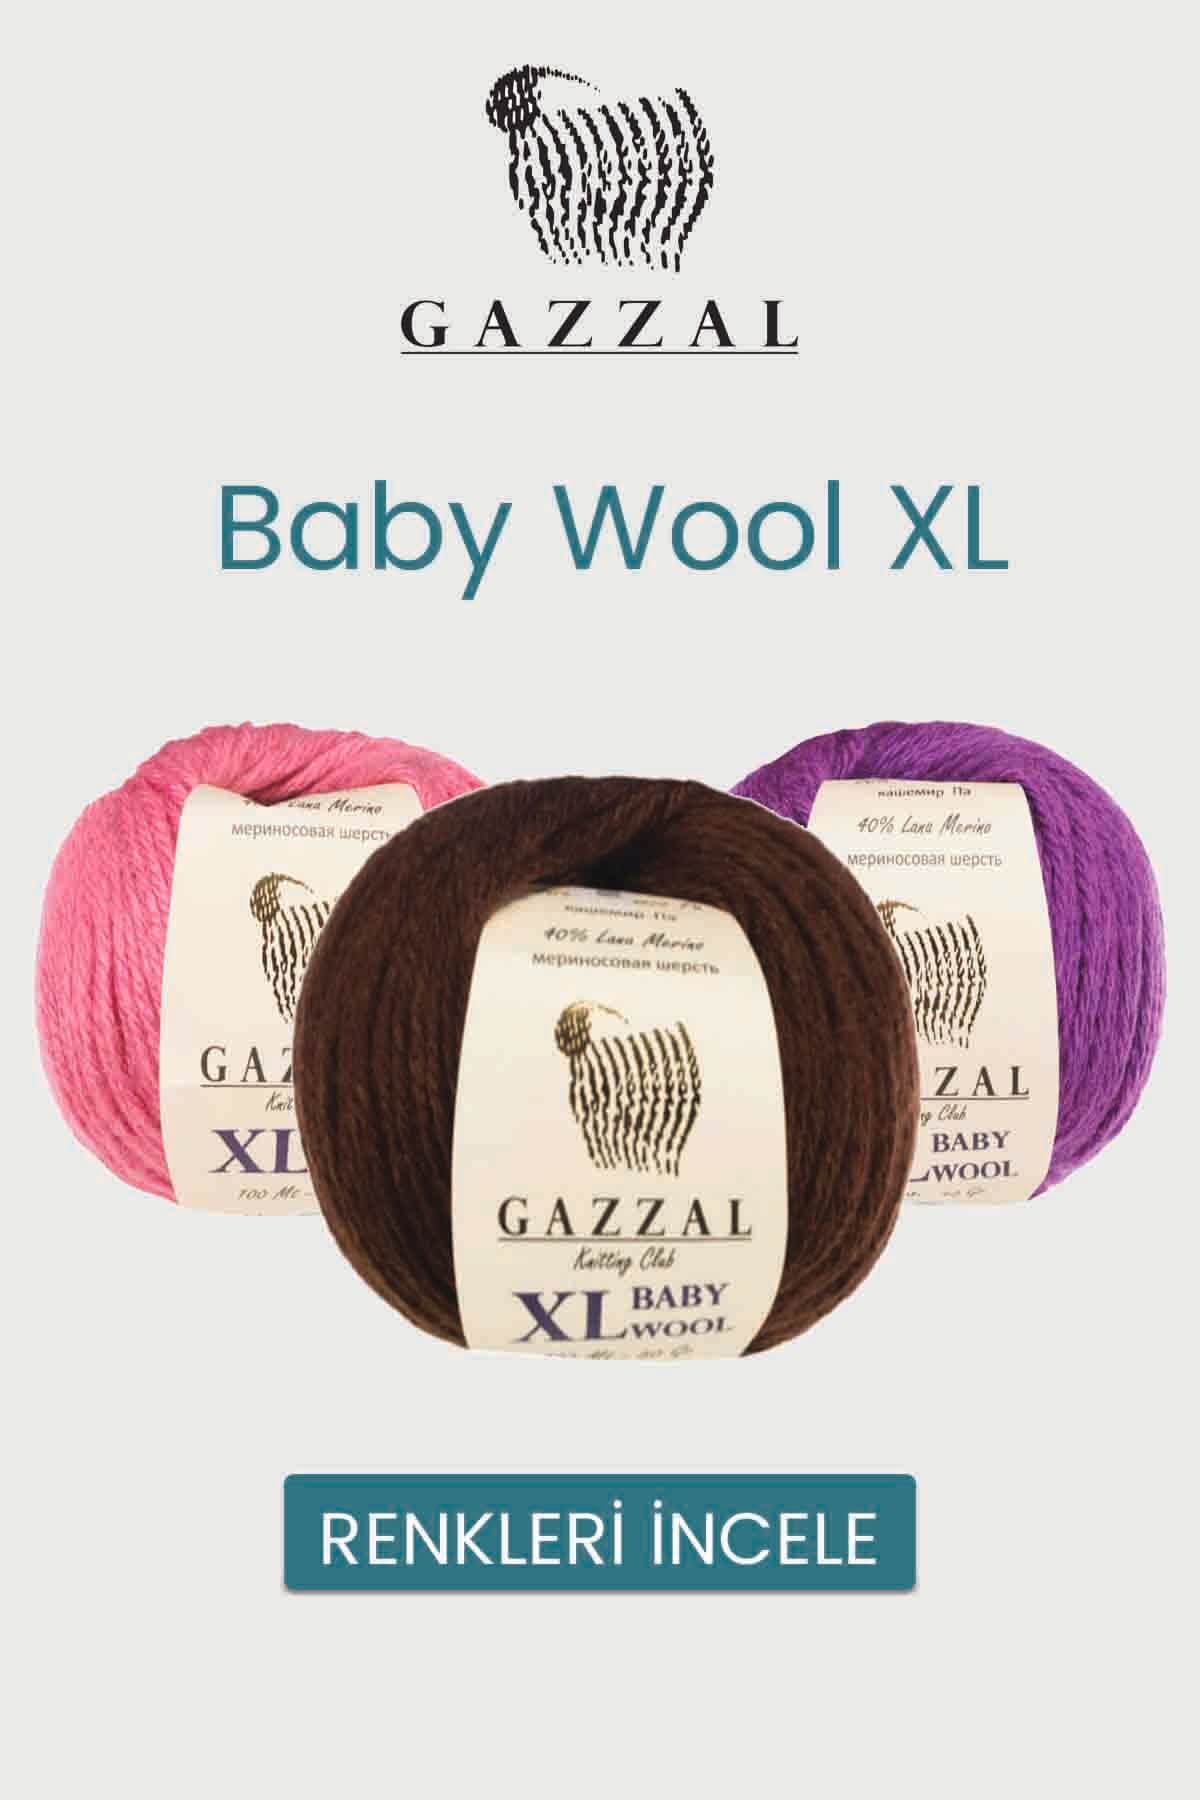 gazzal-baby-wool-xl-tekstilland